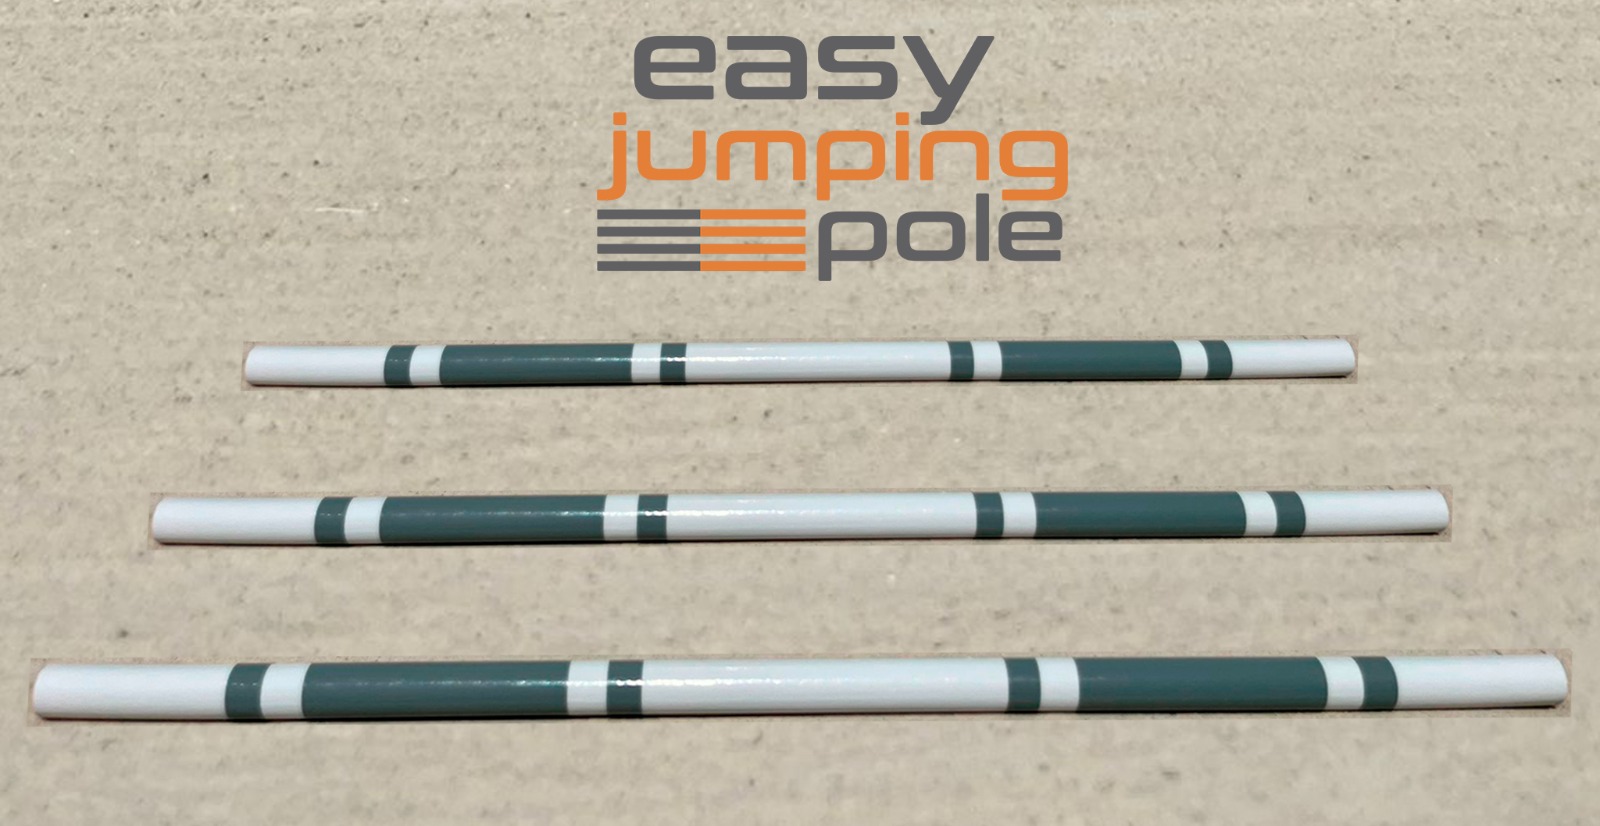 Easy jumping pole Model B-11